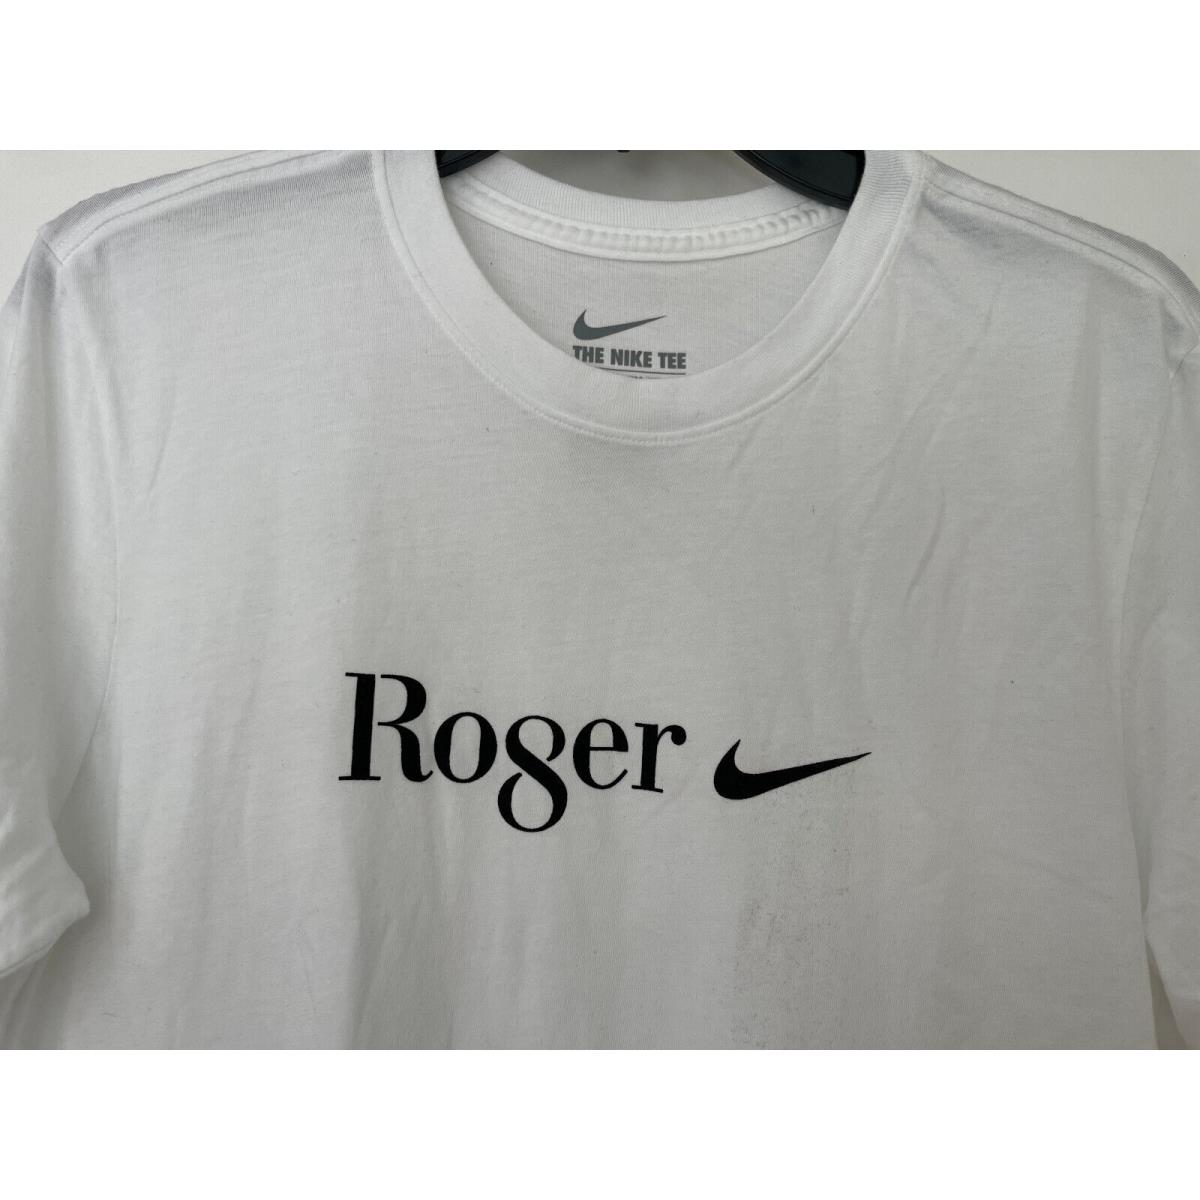 Nike RF Celebration RO8ER Men Tee Shirt Tennis White Wimbledon AO0981 101